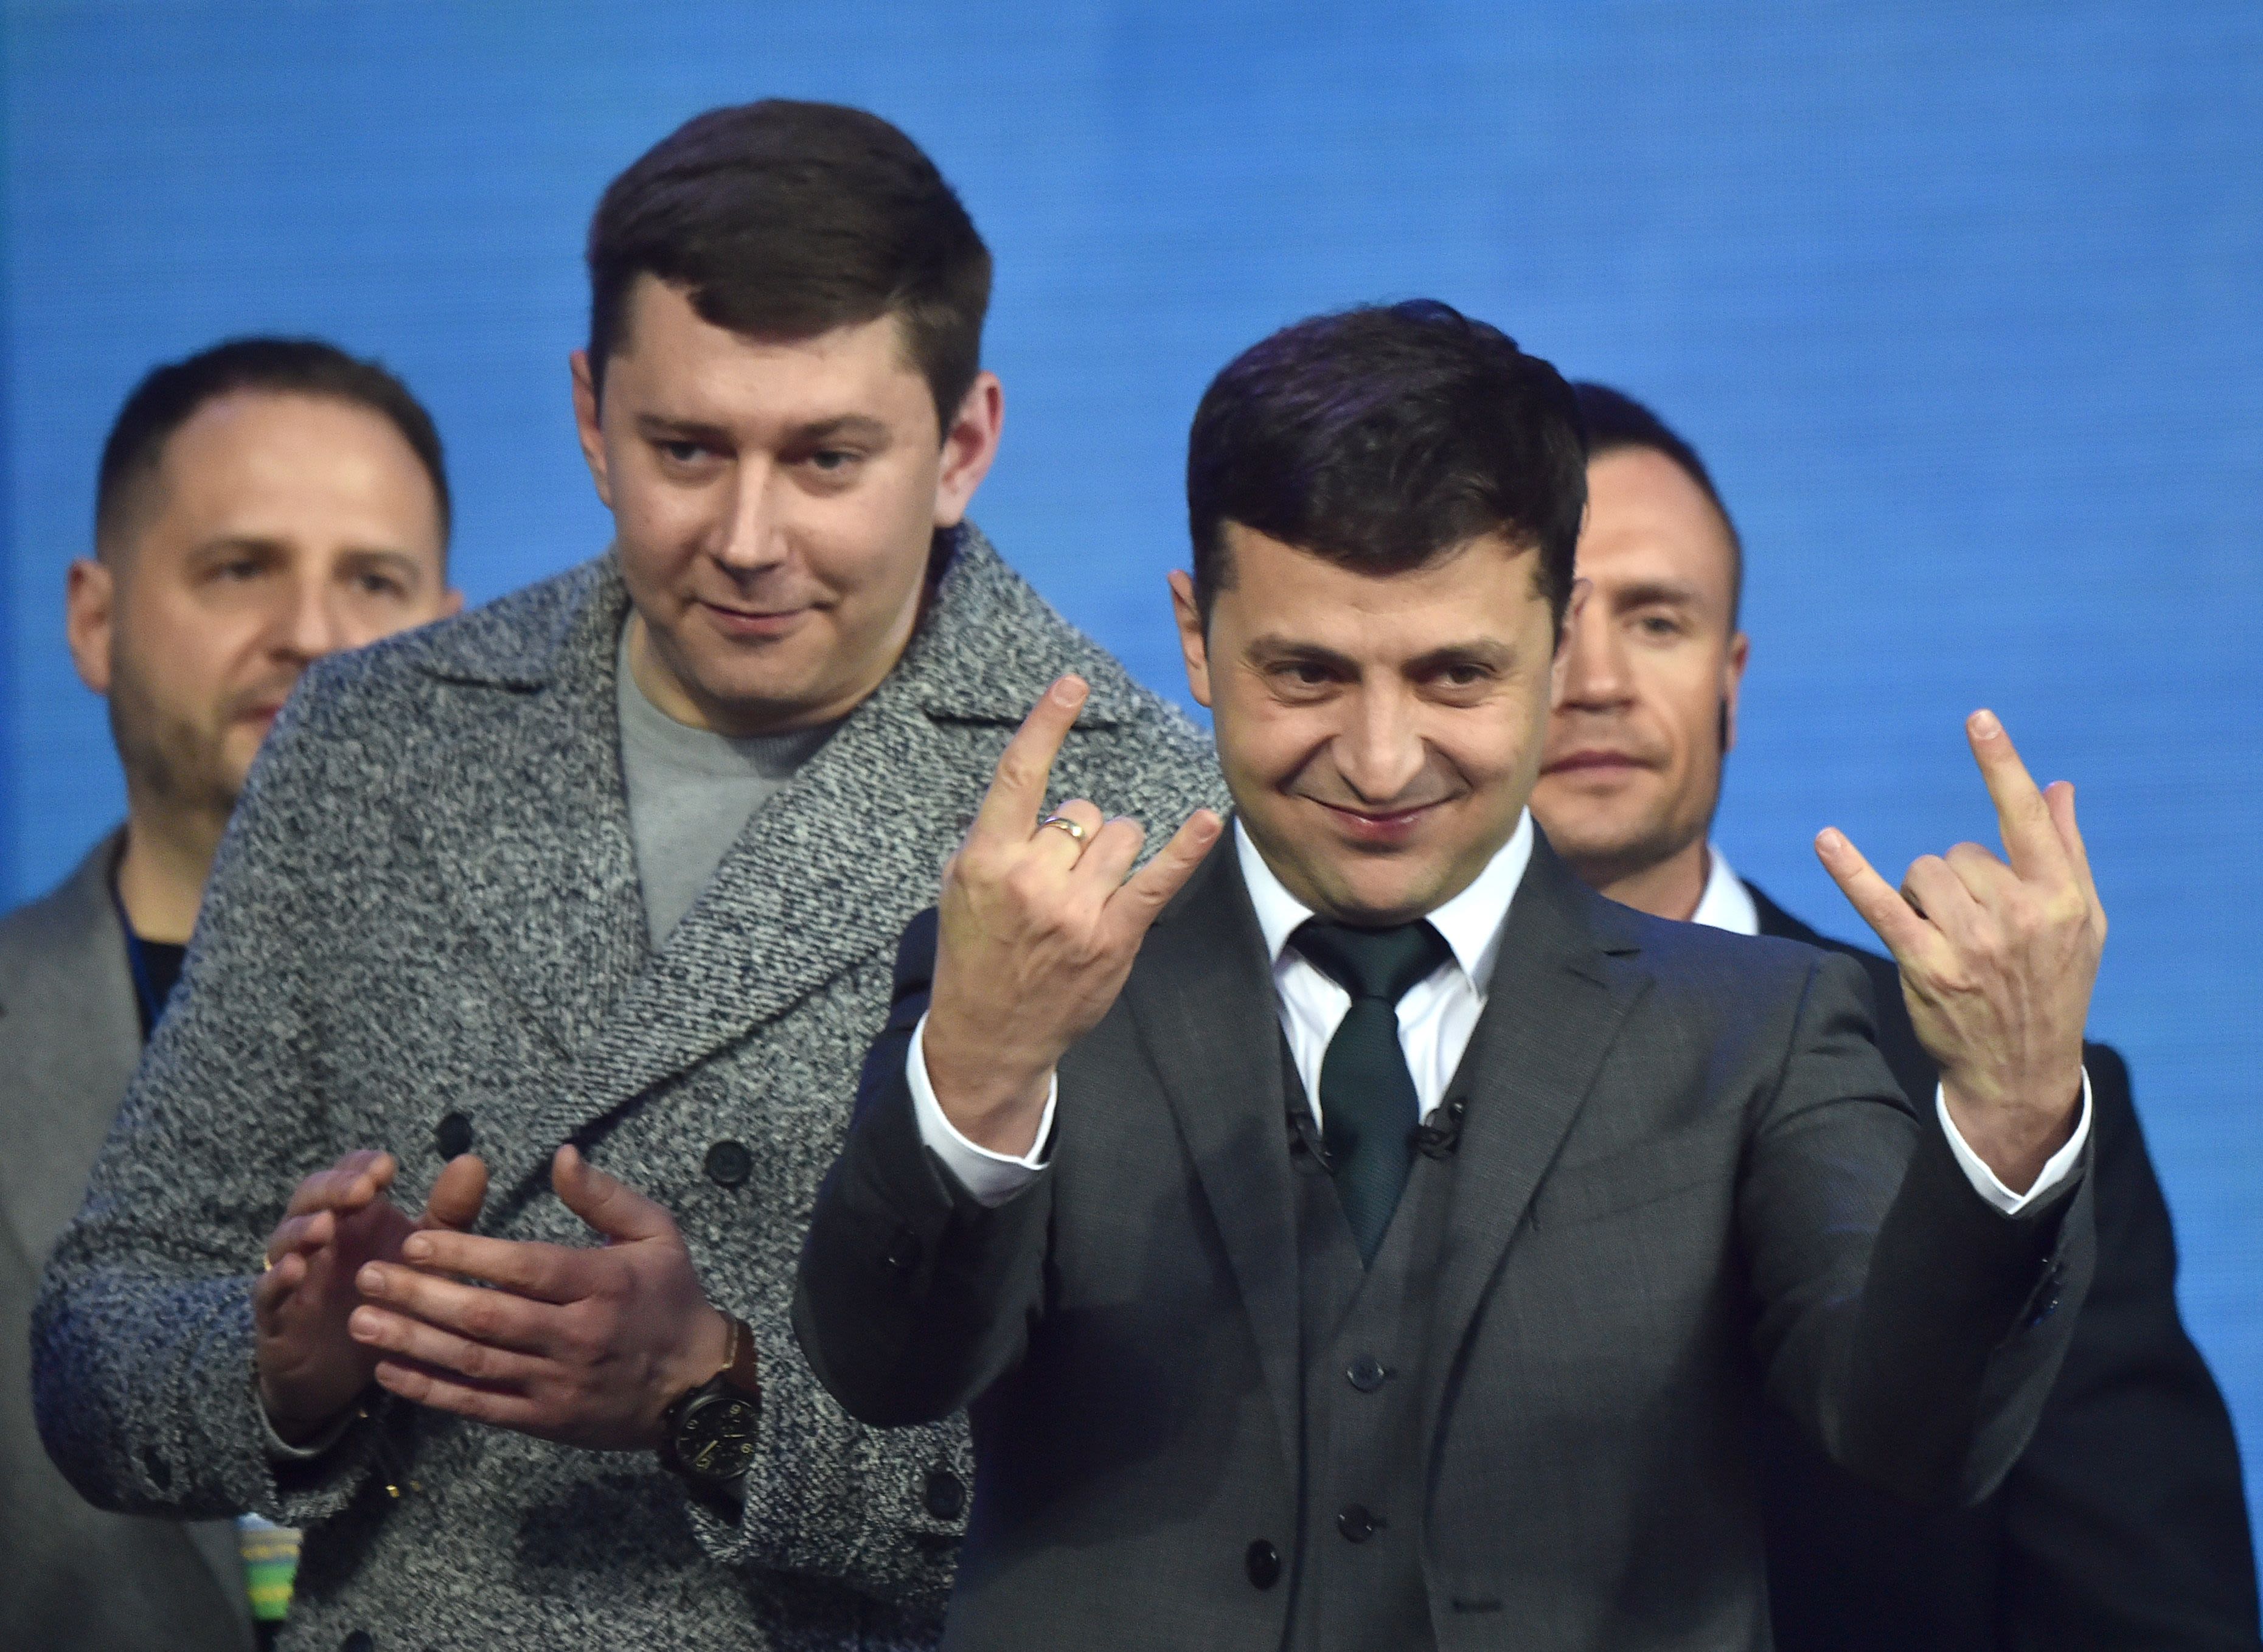 Volodymyr Zelensky played Ukraine's president on TV. Now it's a reality |  CNN